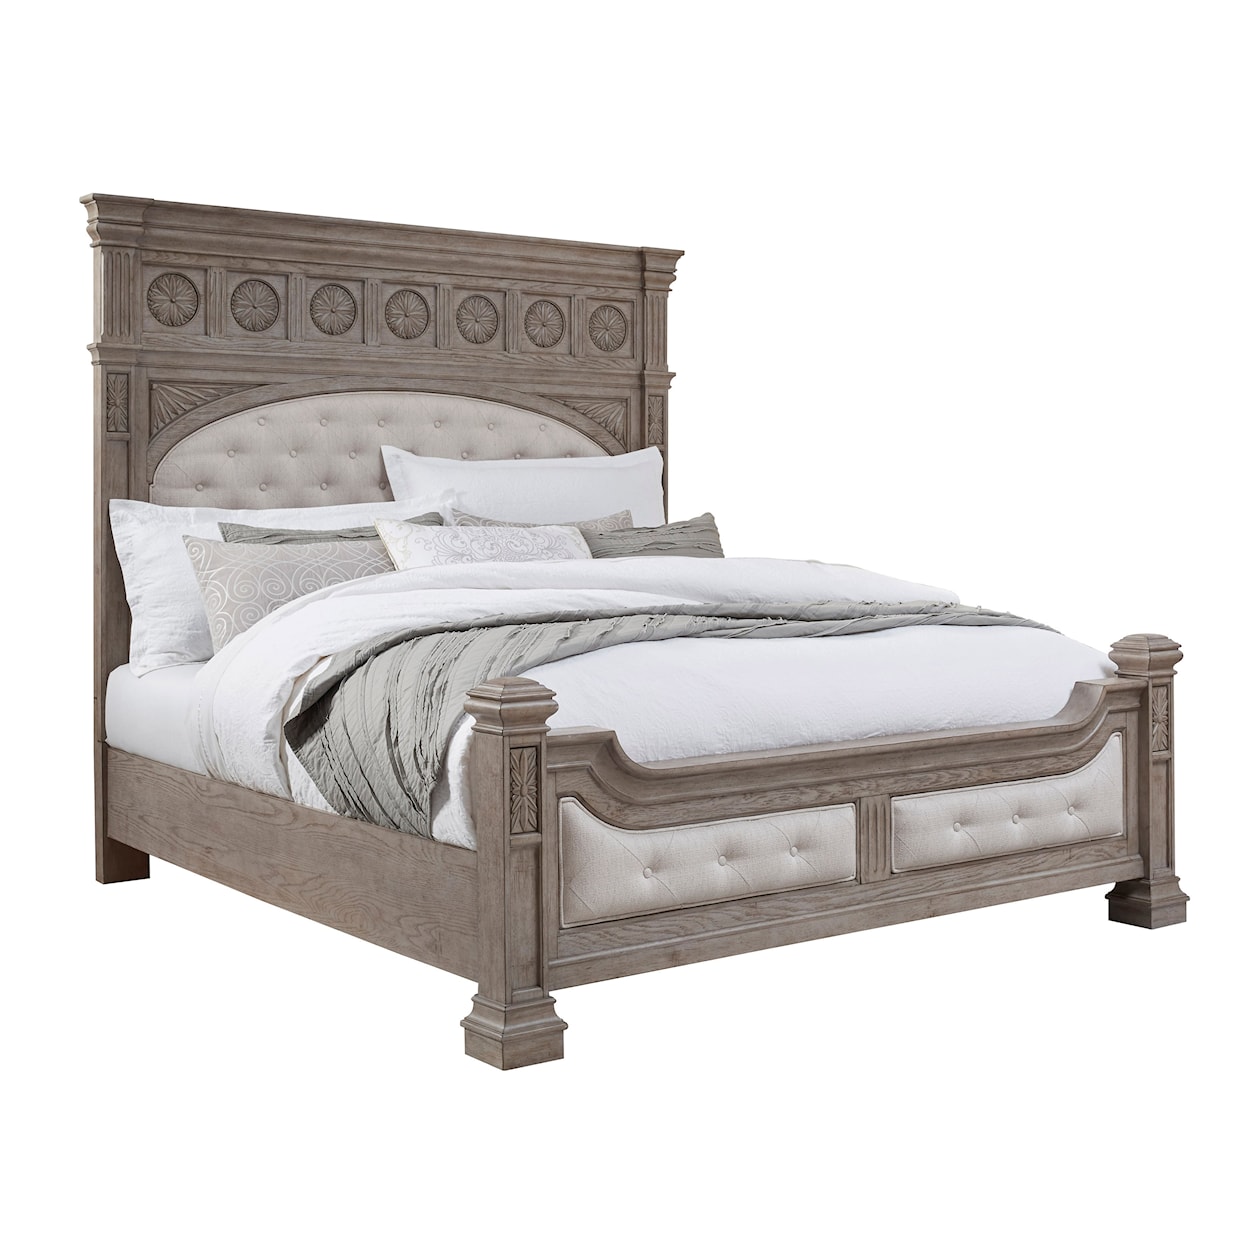 Pulaski Furniture Kingsbury Queen Panel Bed